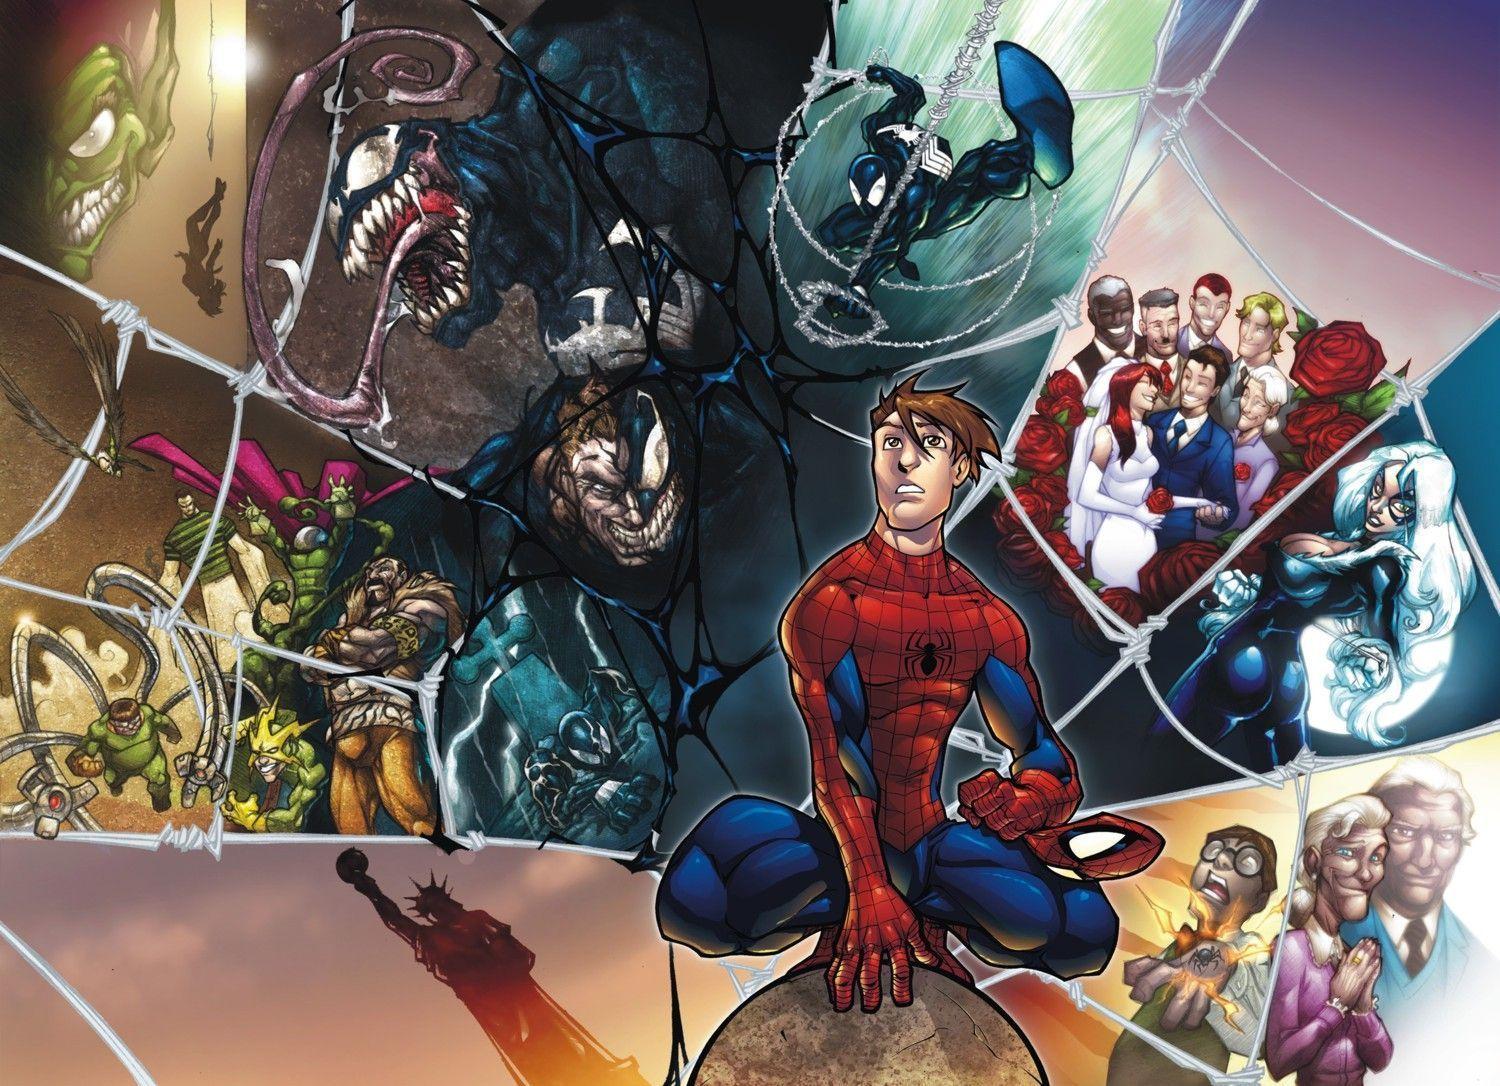 image For > Spiderman Vs Green Goblin Wallpaper